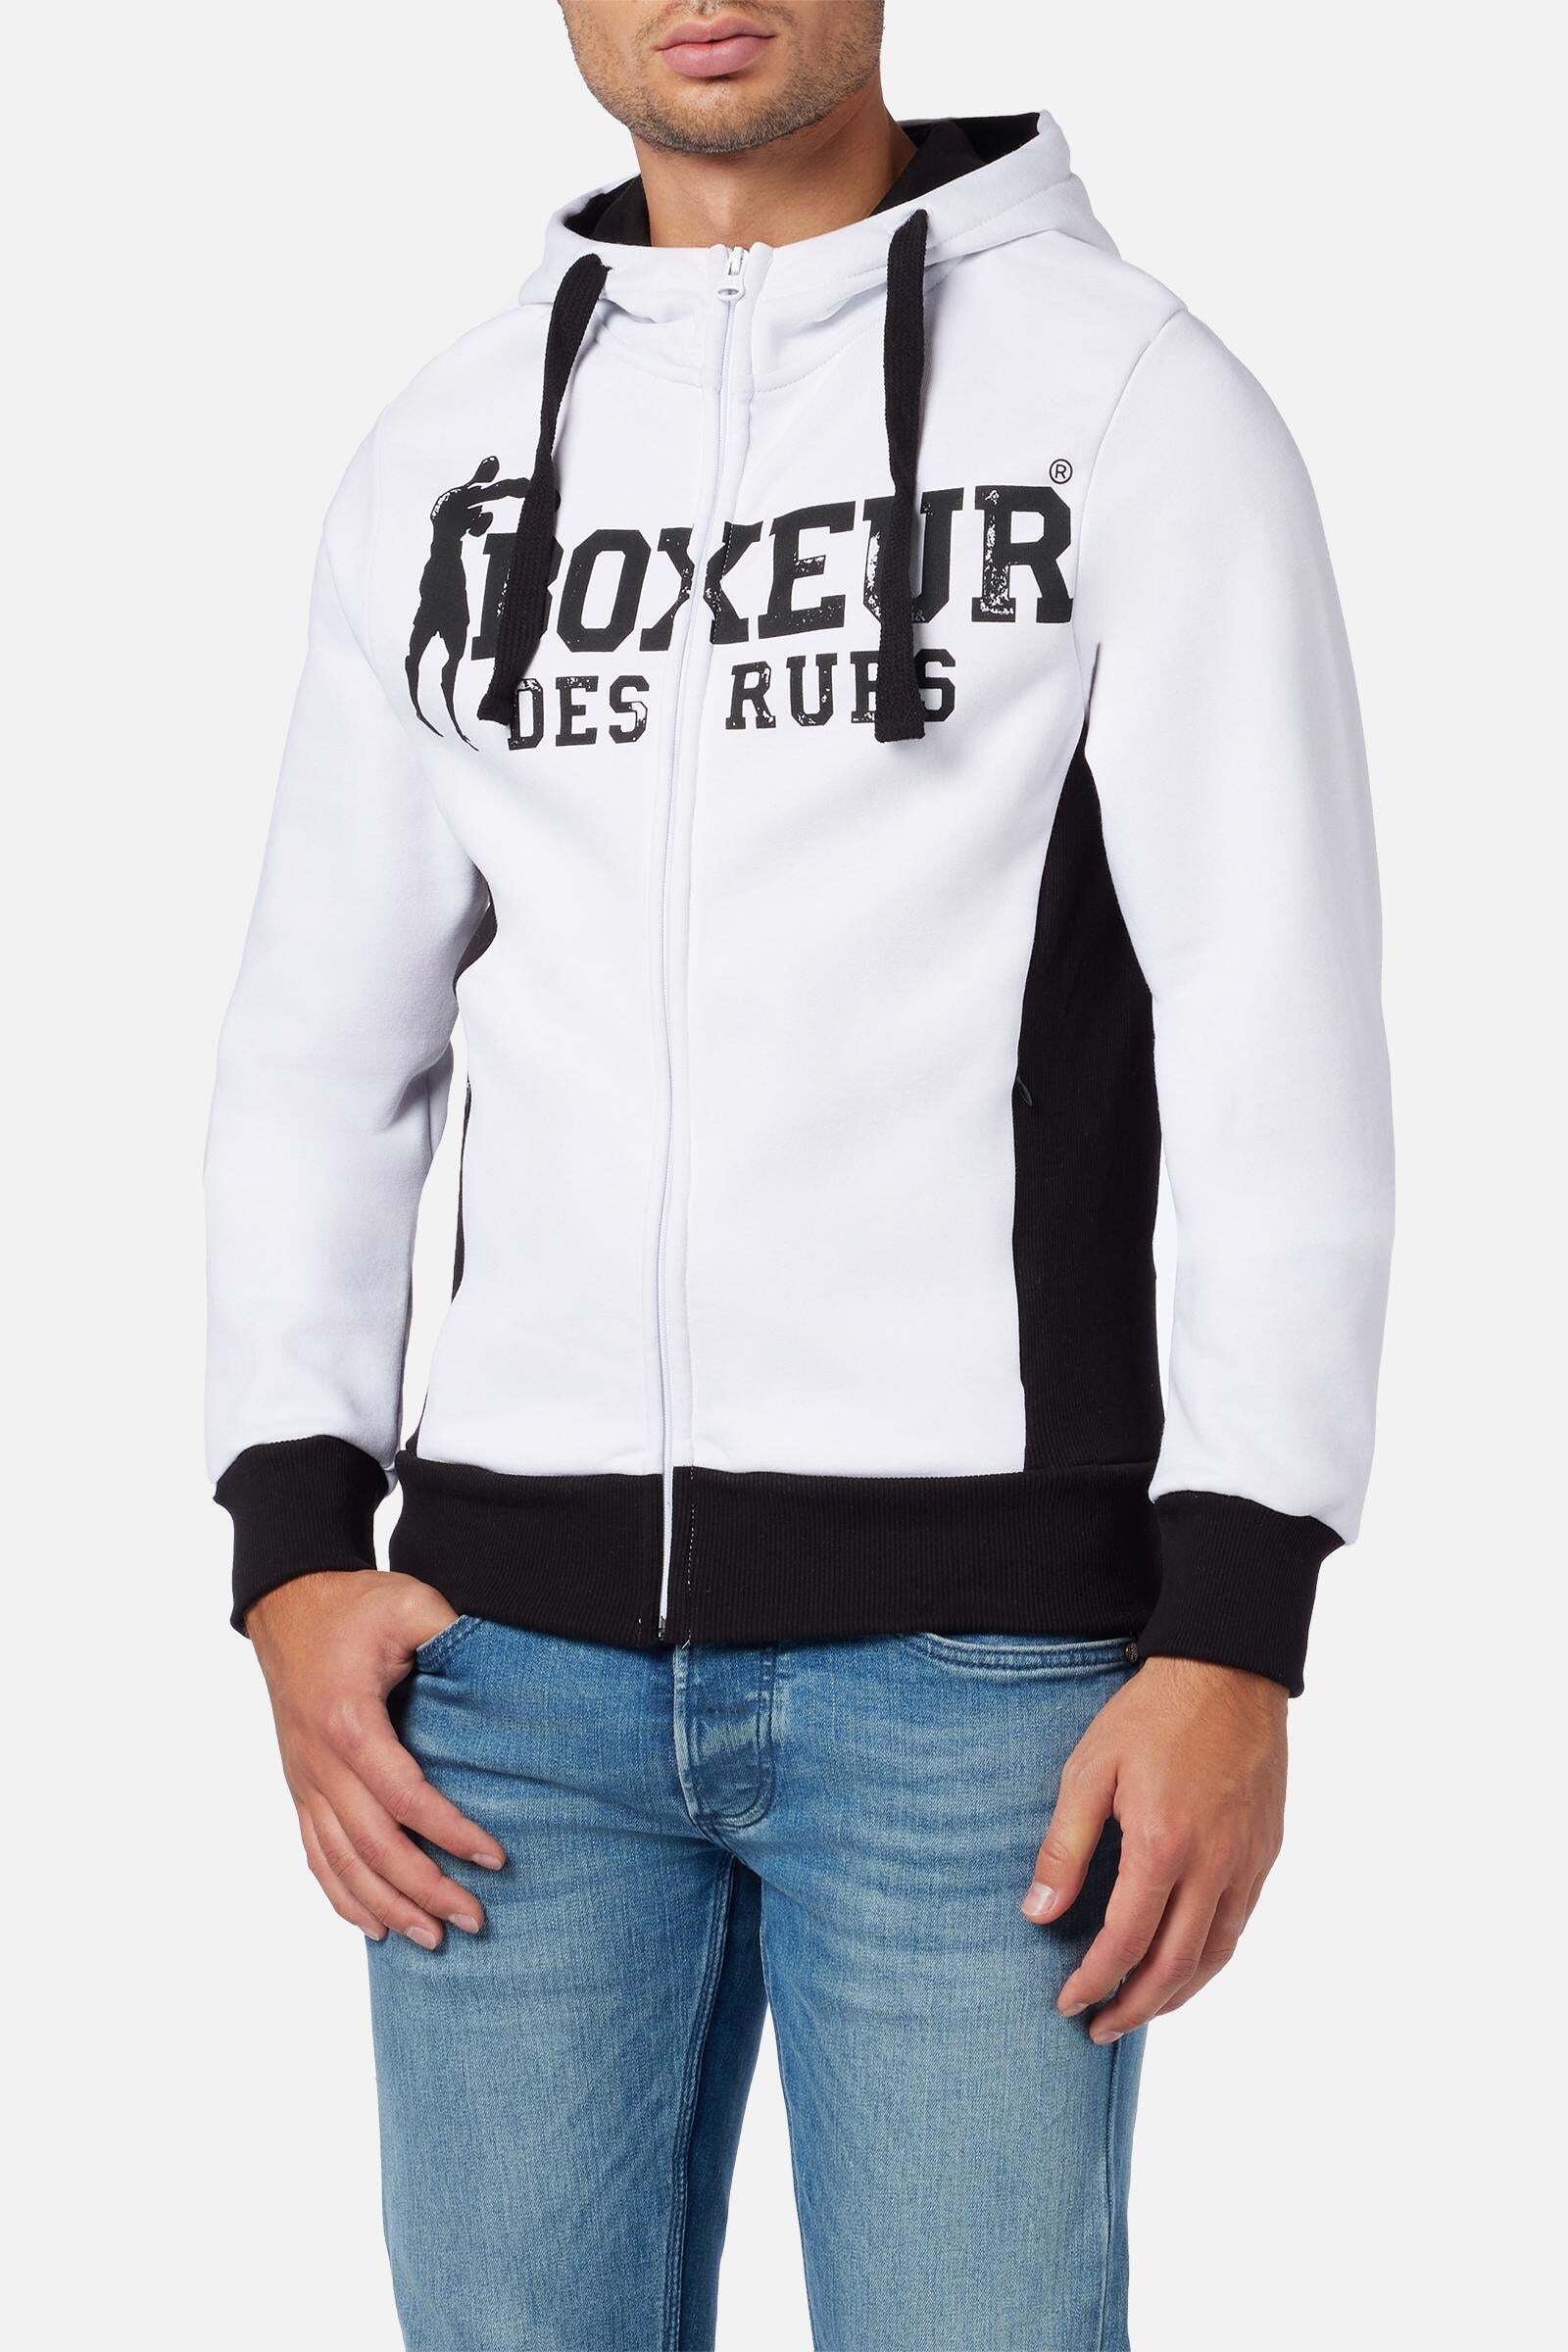 BOXEUR DES RUES Sweatjacke »Sweatshirts Hooded Full Zip Sweatshirt«